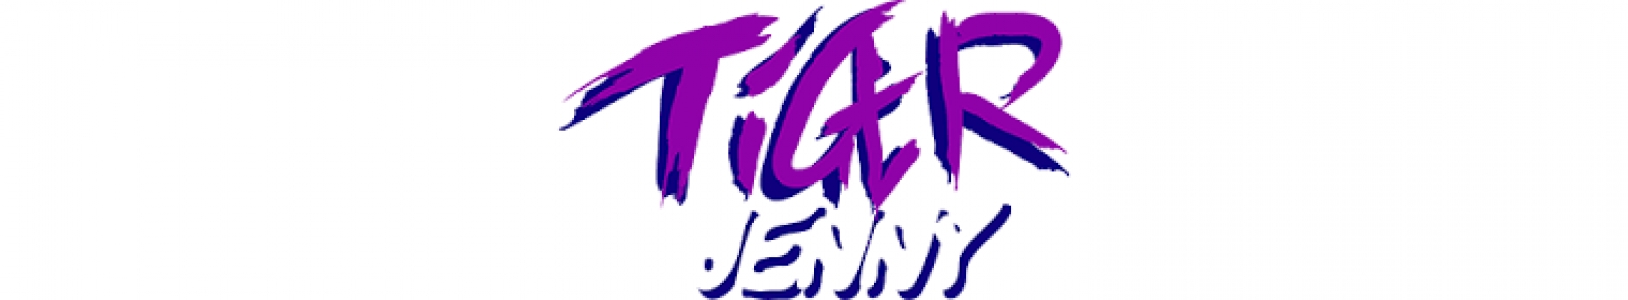 Tiger Jenny banner